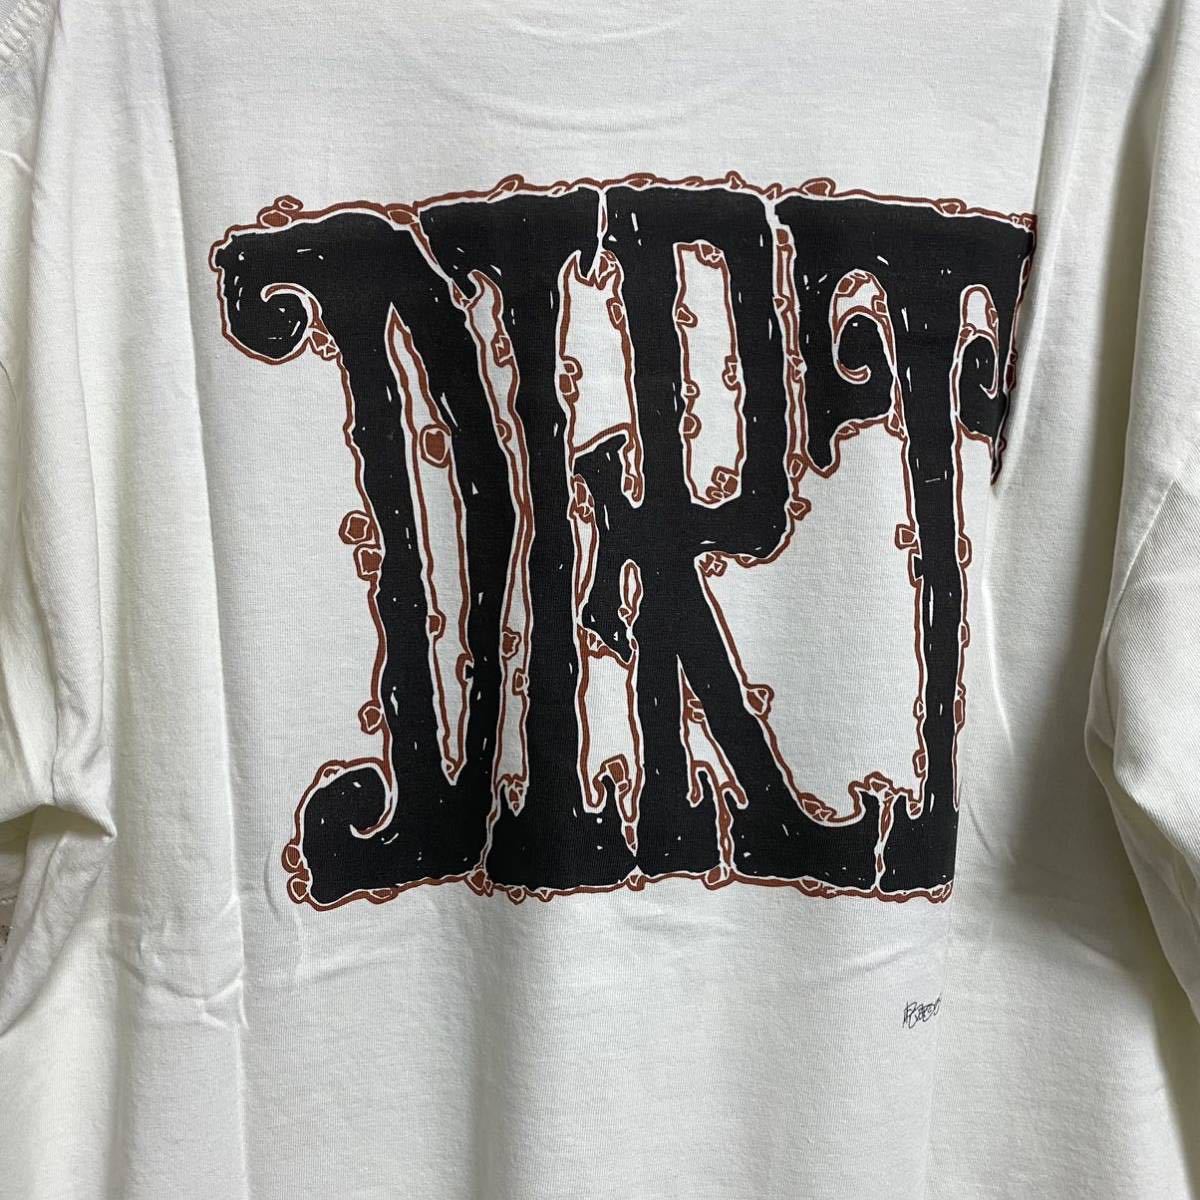 Alice in Chains DIRT 1992 Vintage T-Shirt ヴィンテージ ビンテージ Tシャツ soundgarden nirvana nine inch nails sonic youth eminem_画像5